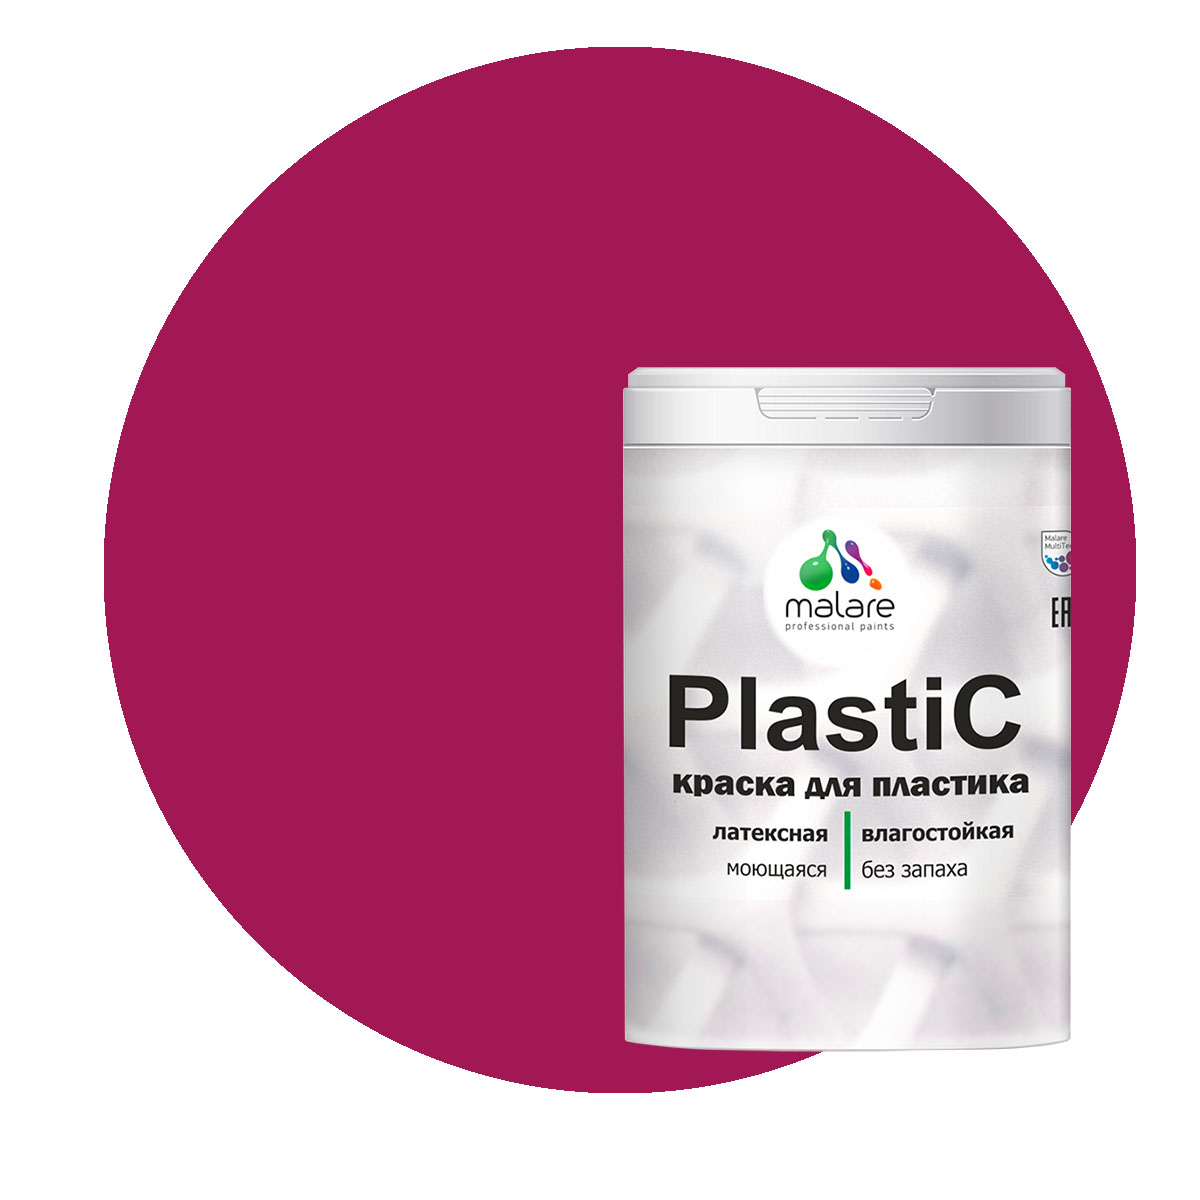 Краска Malare PlastiC для пластика, ПВХ, для сайдинга, амарантово-пурпурный, 2 кг.